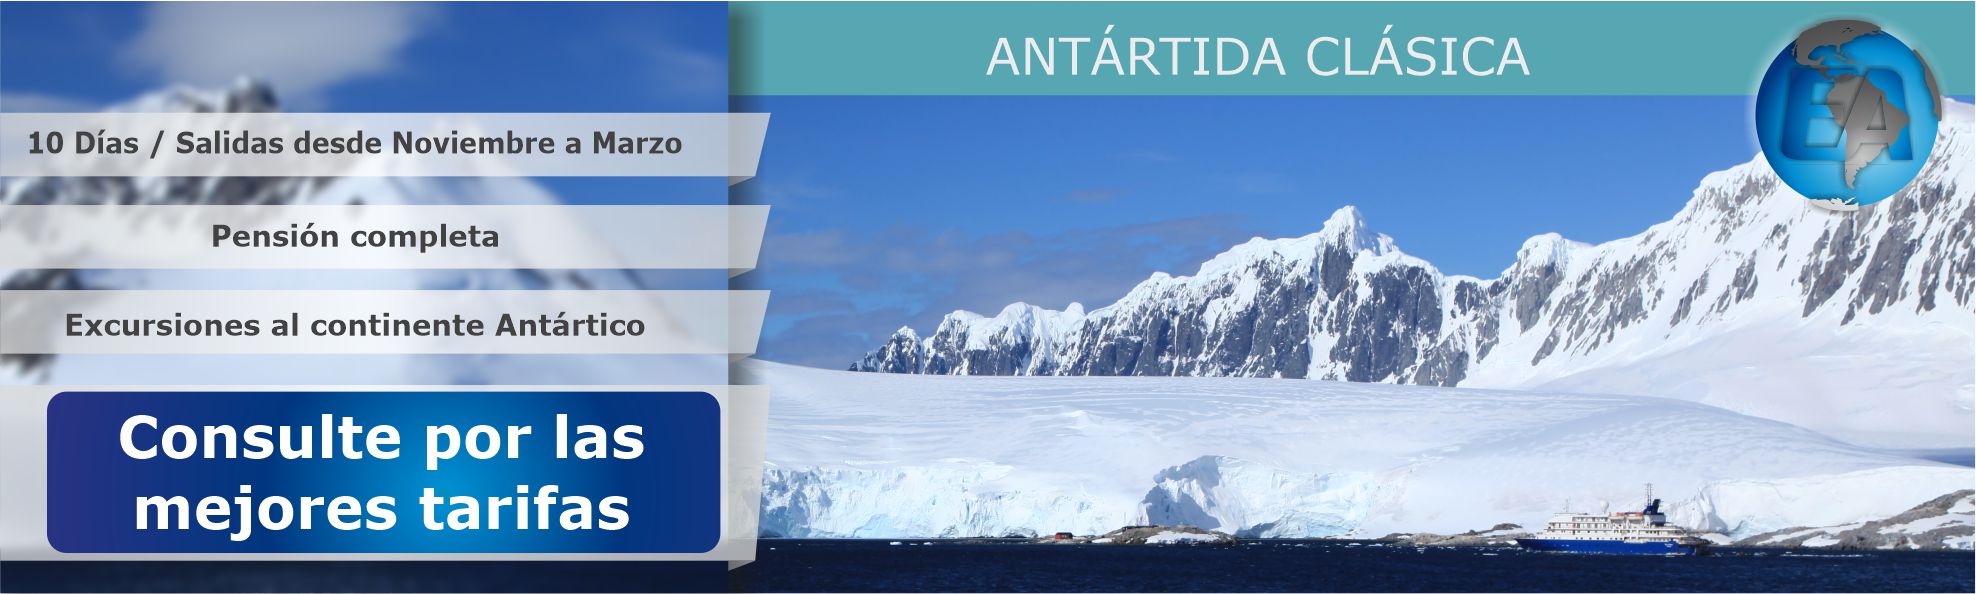 Antartida Clásica